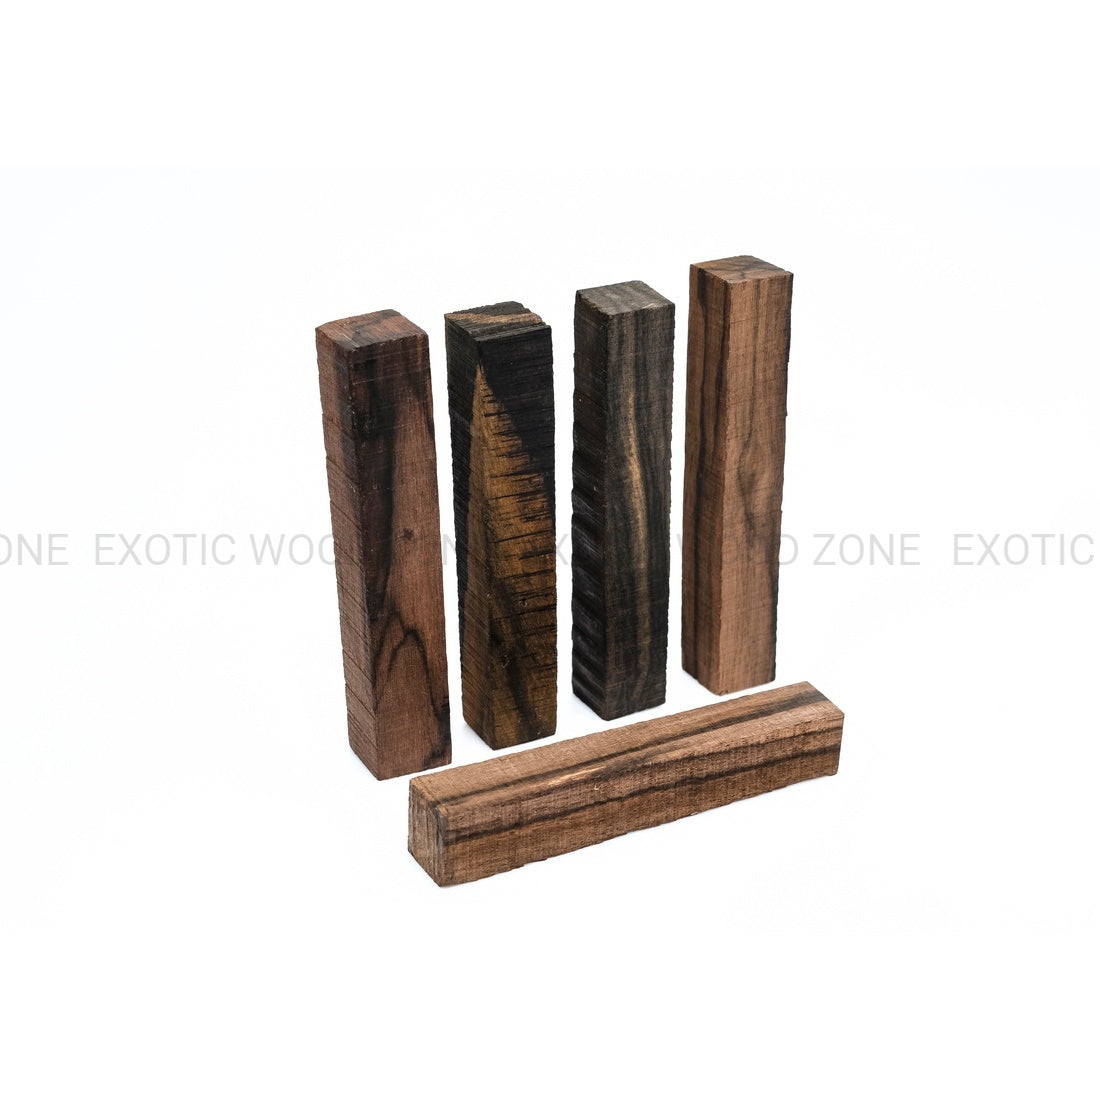 Exotic Ebony Wood Pen Blanks - Exotic Wood Zone - Buy online Across USA 